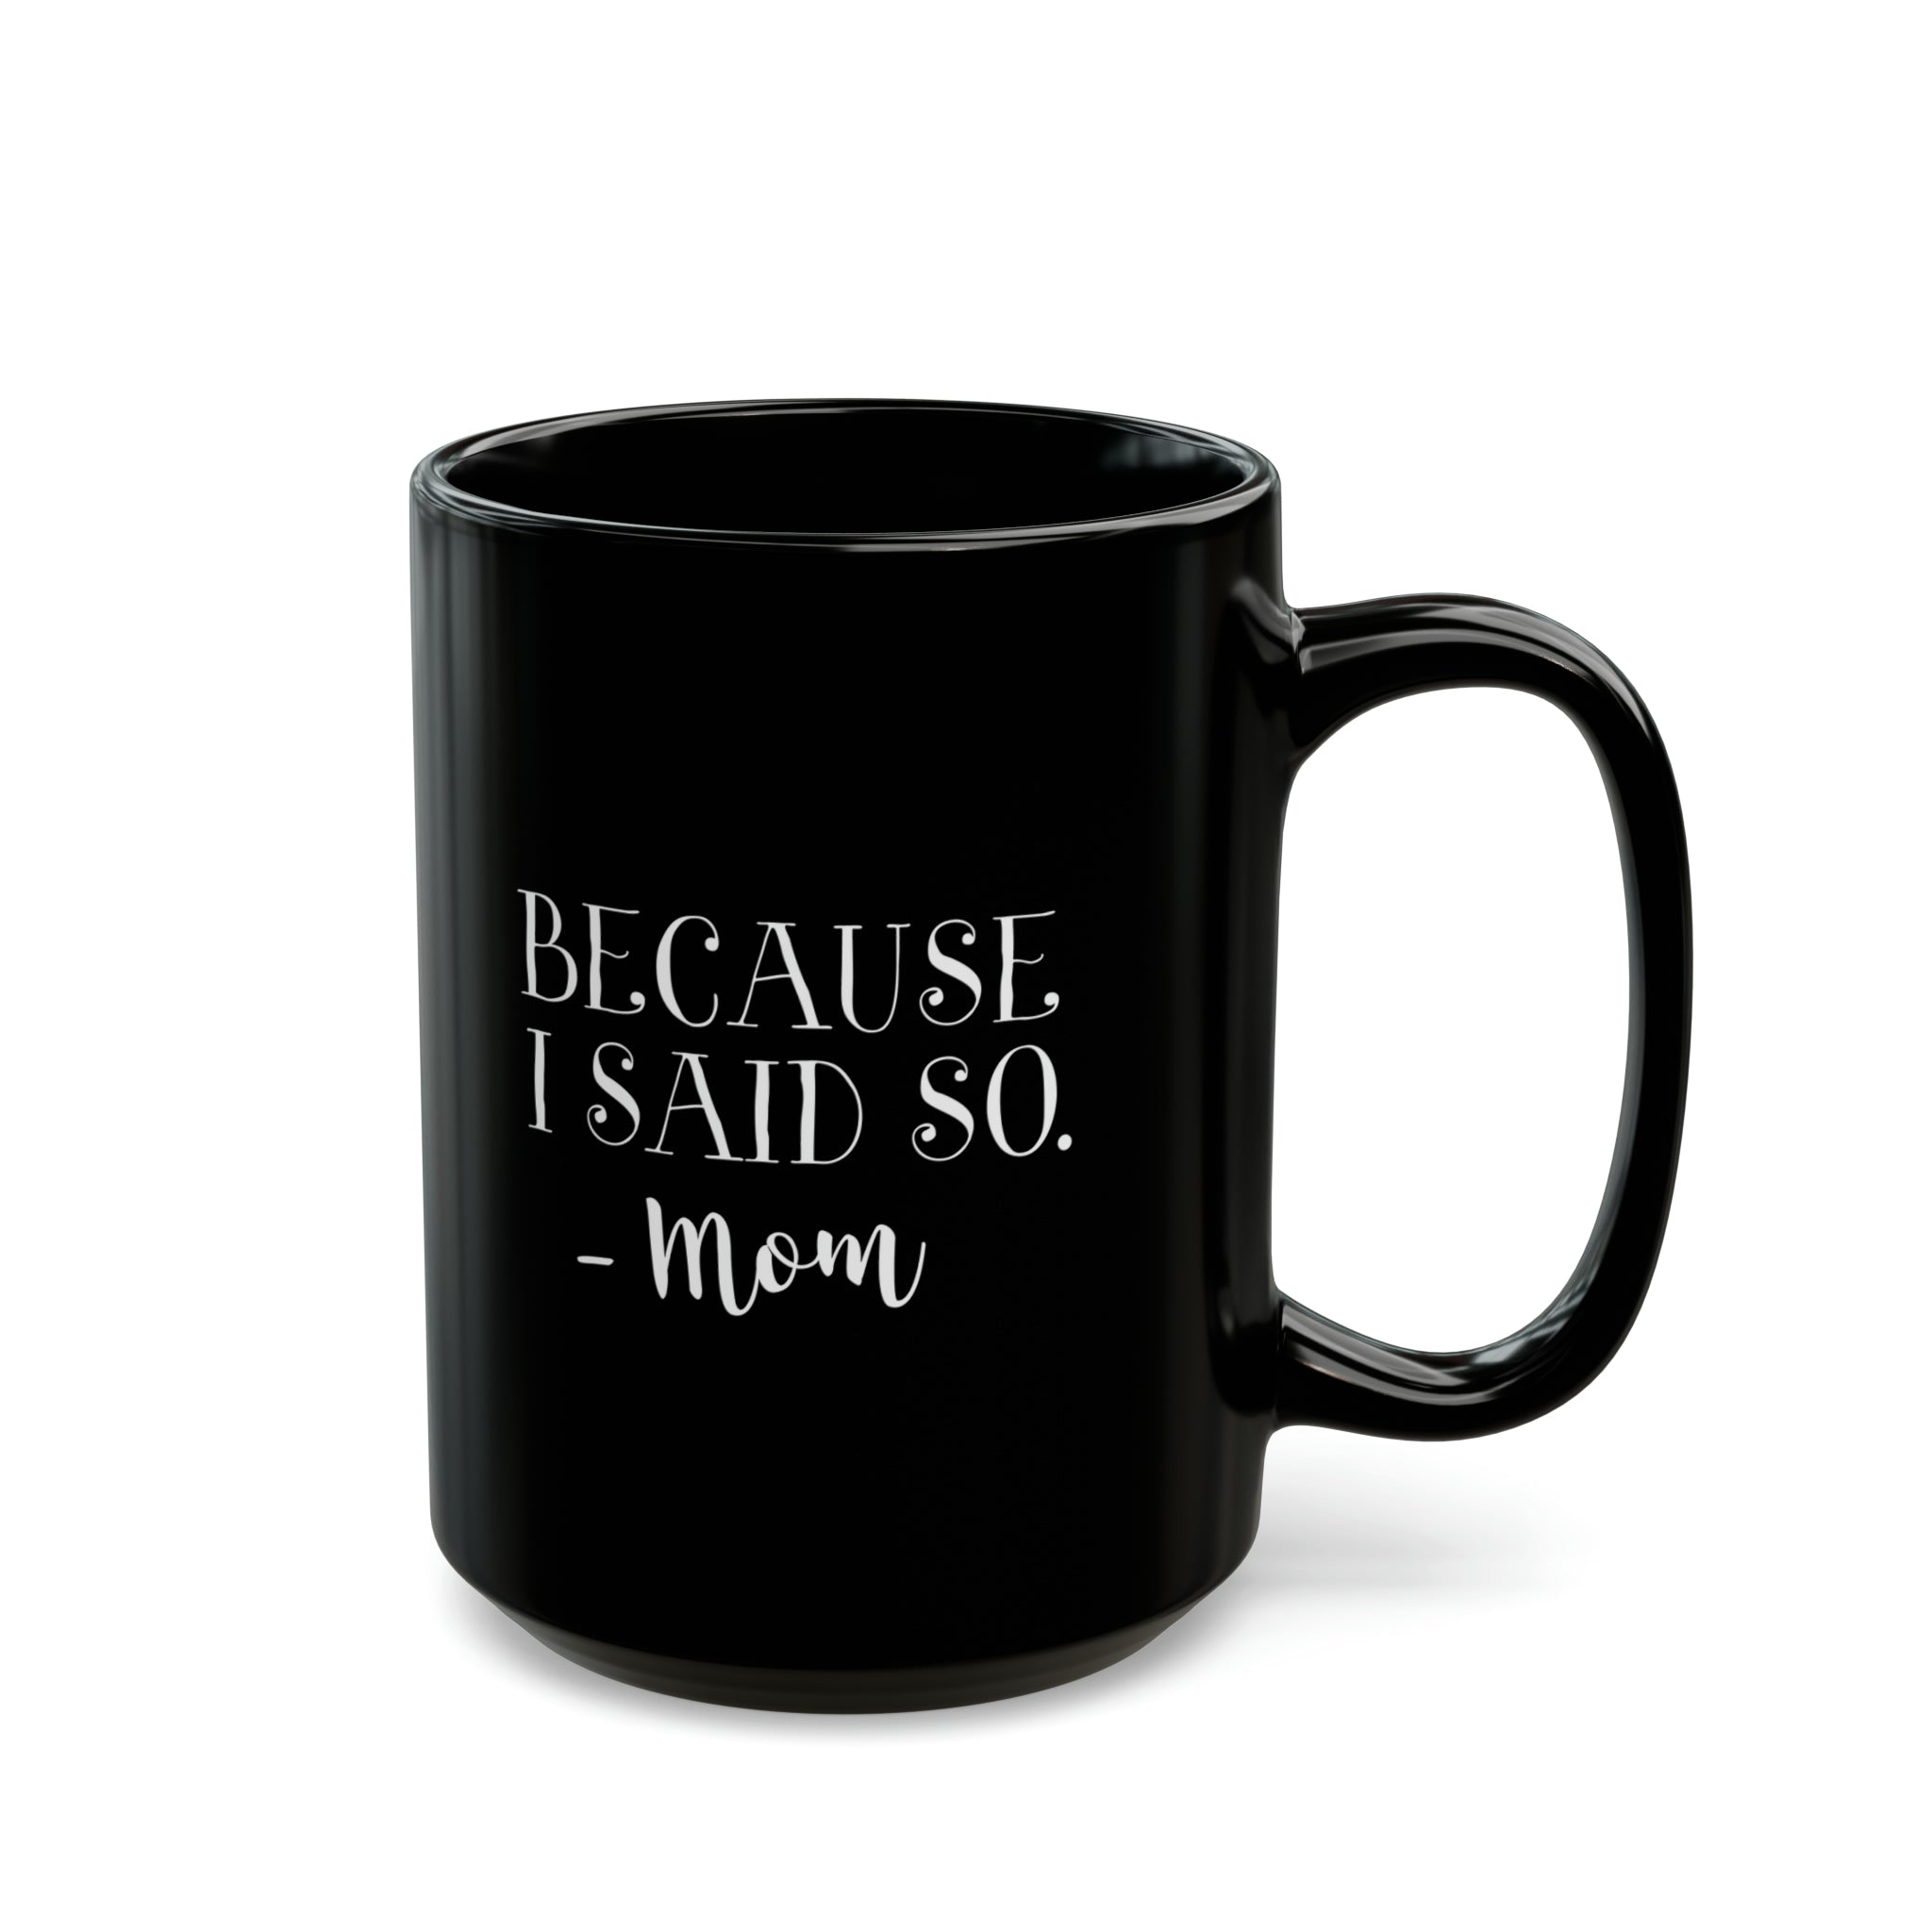 Mom Funny Black Mug (11oz, 15oz) Because I Said So -Mom Gift For Mom Mother's Day Gift Mother's Day Birthday Christmas Valentine's Gift Cup